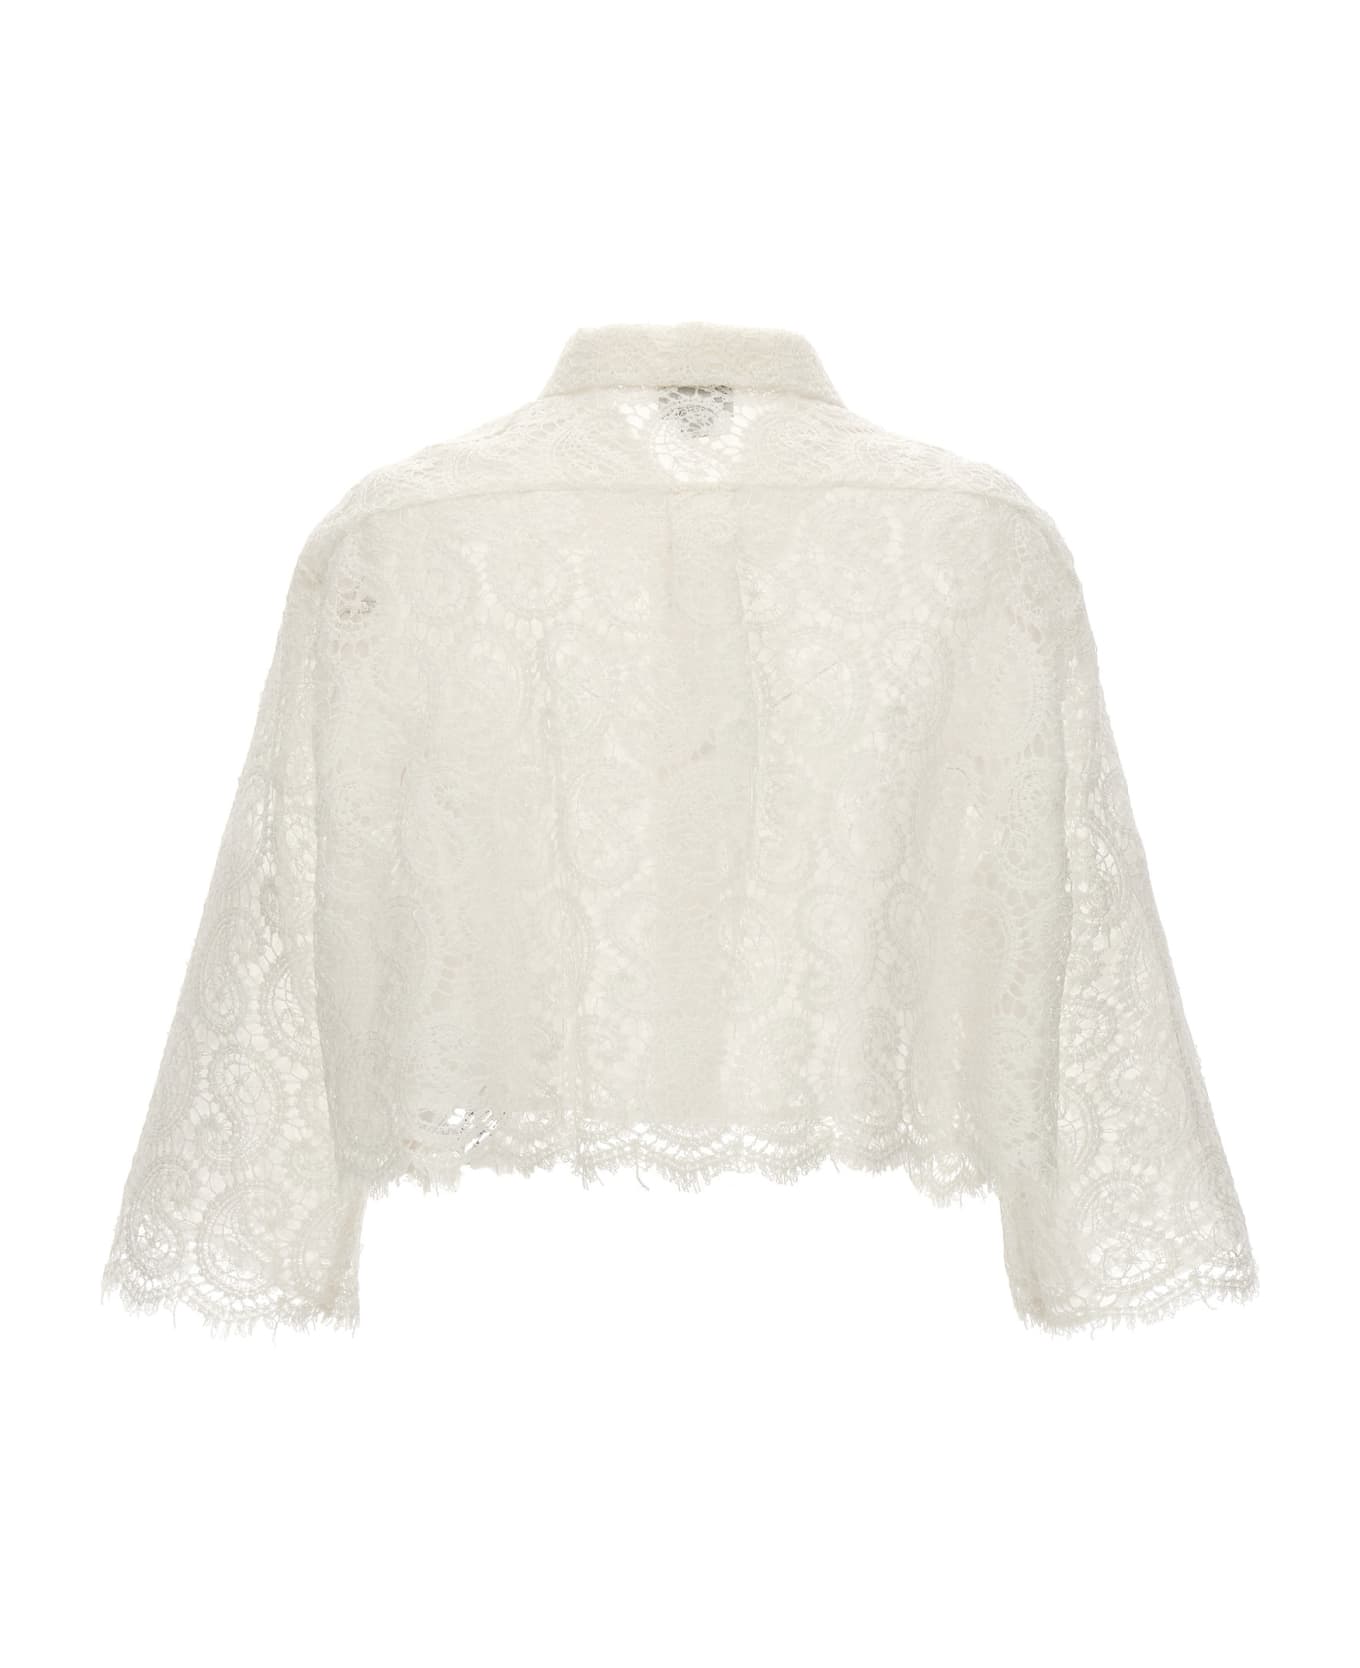 Giambattista Valli Macramé Shirt - White